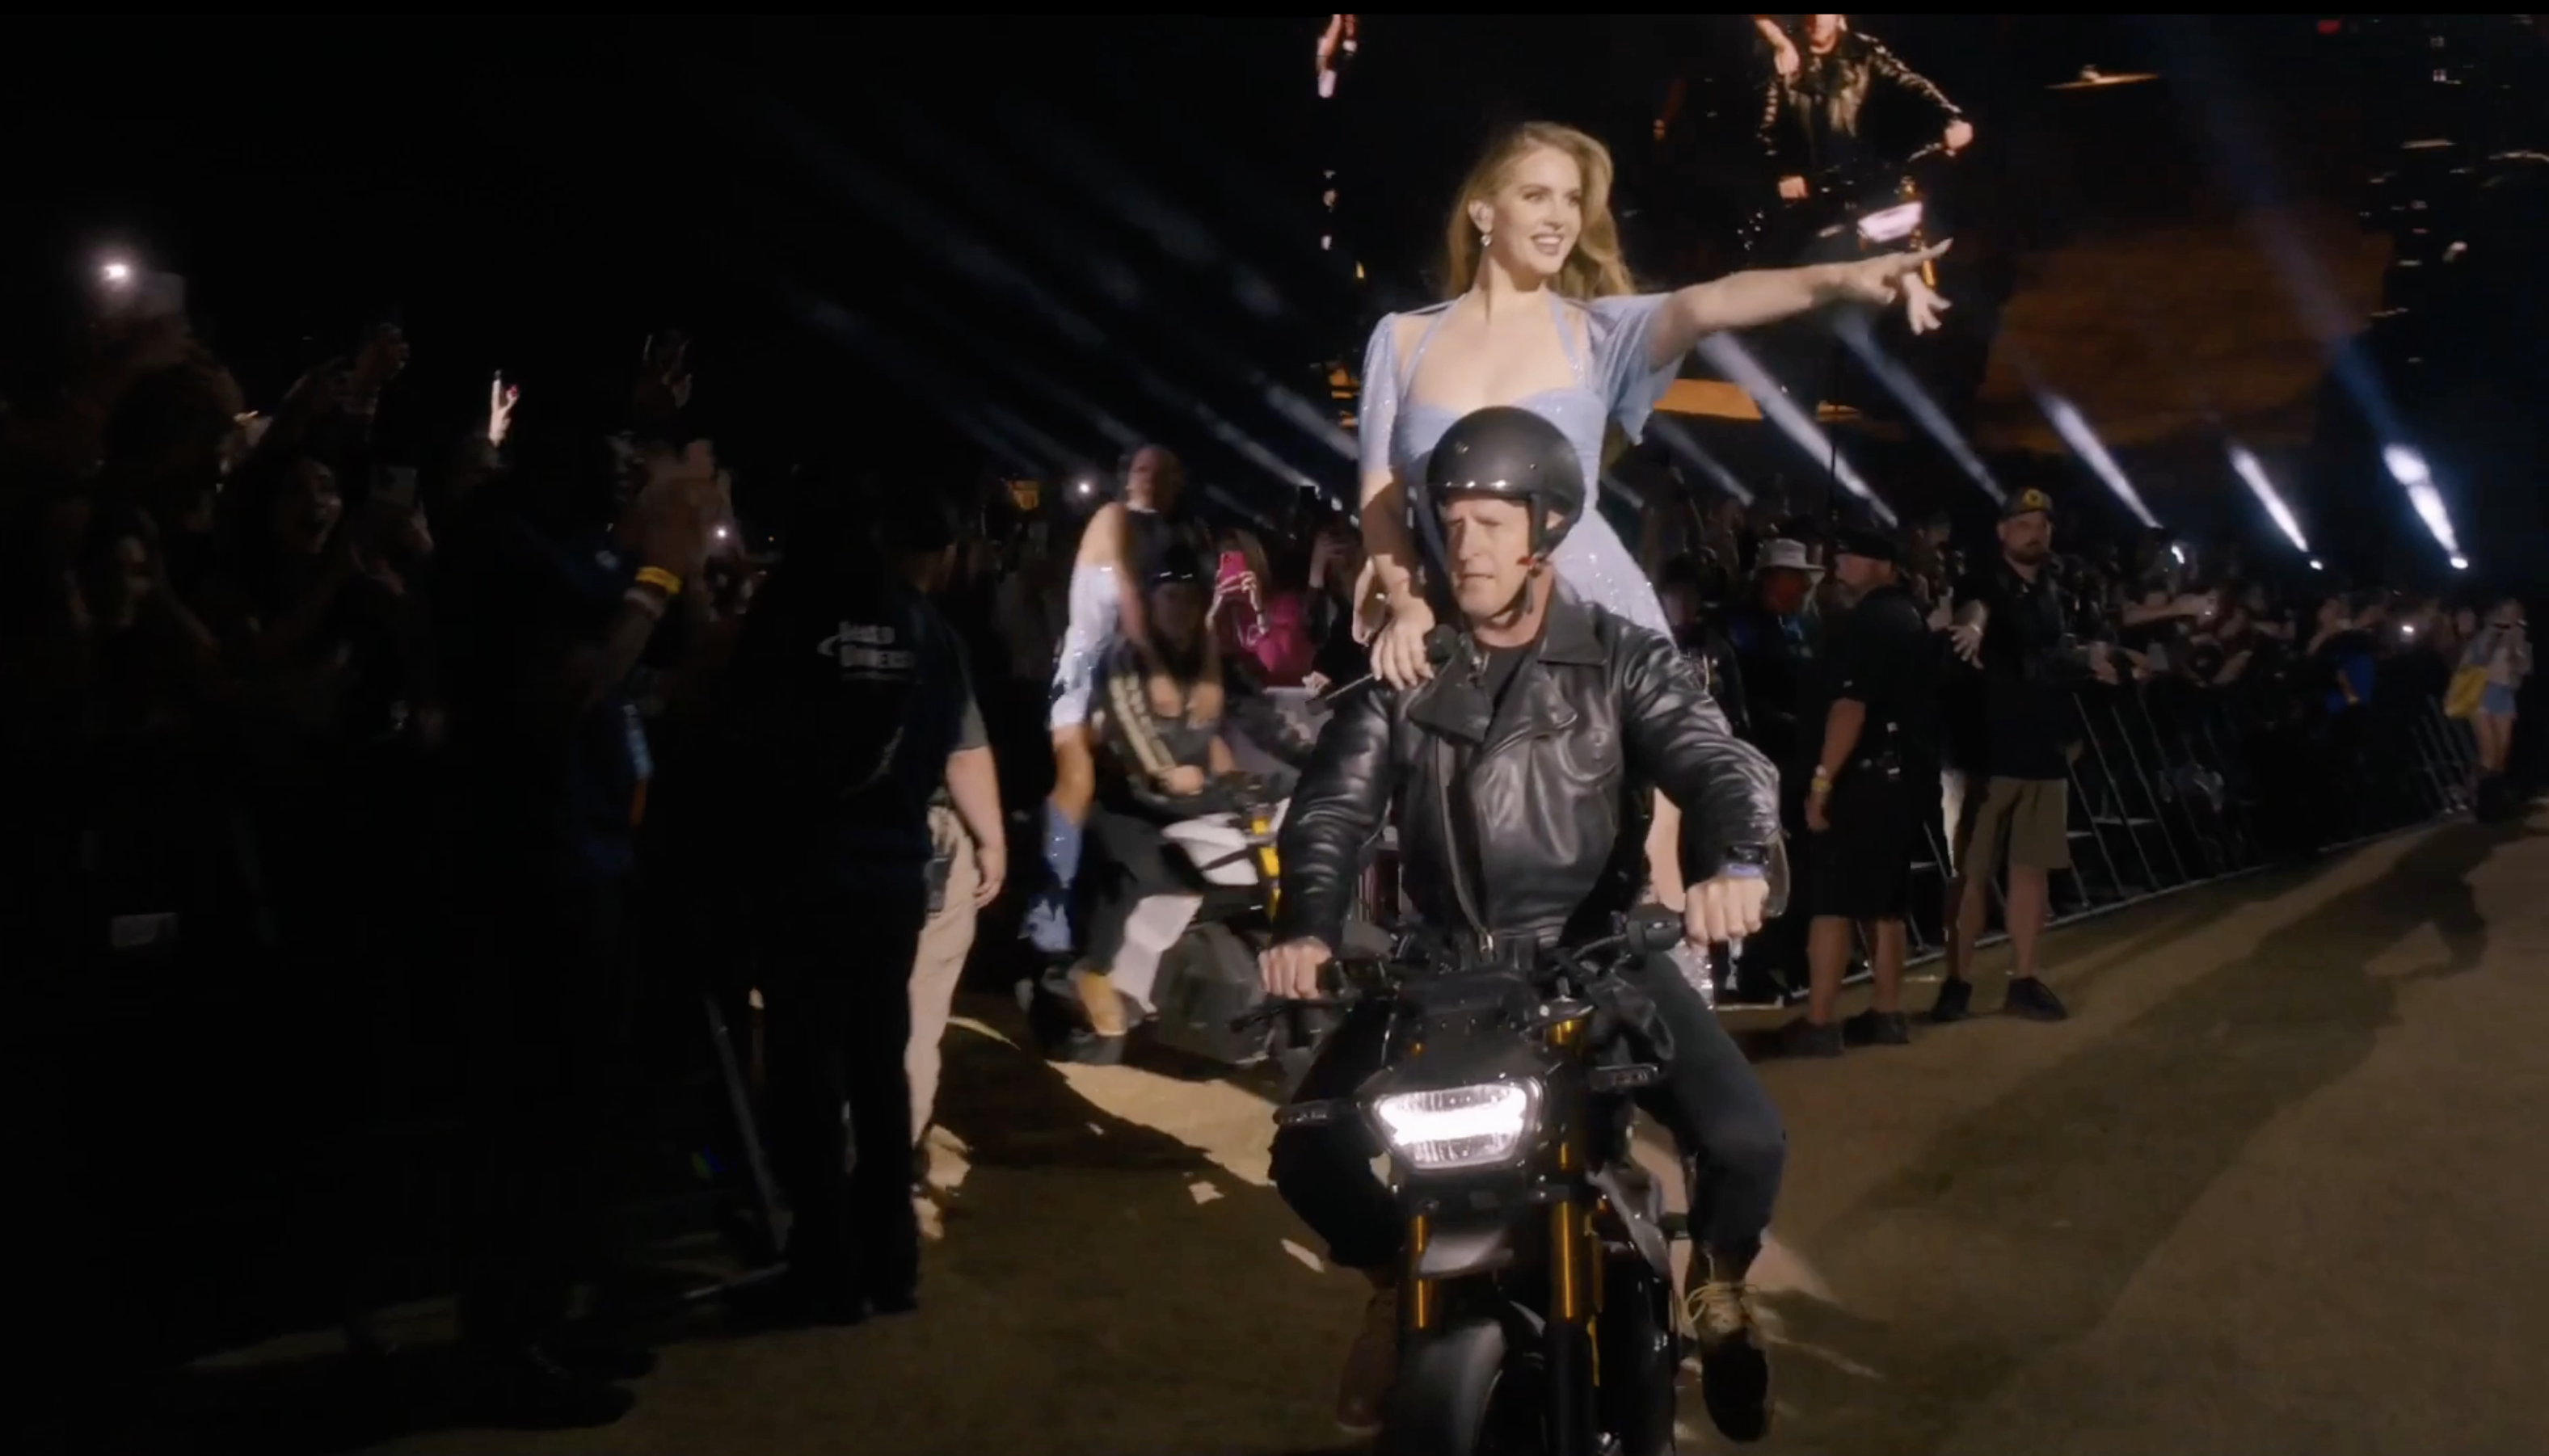 Lana Del Rey arrives makes Coachella Brand Entrance on Ryvid Anthem Electric Motorcycle